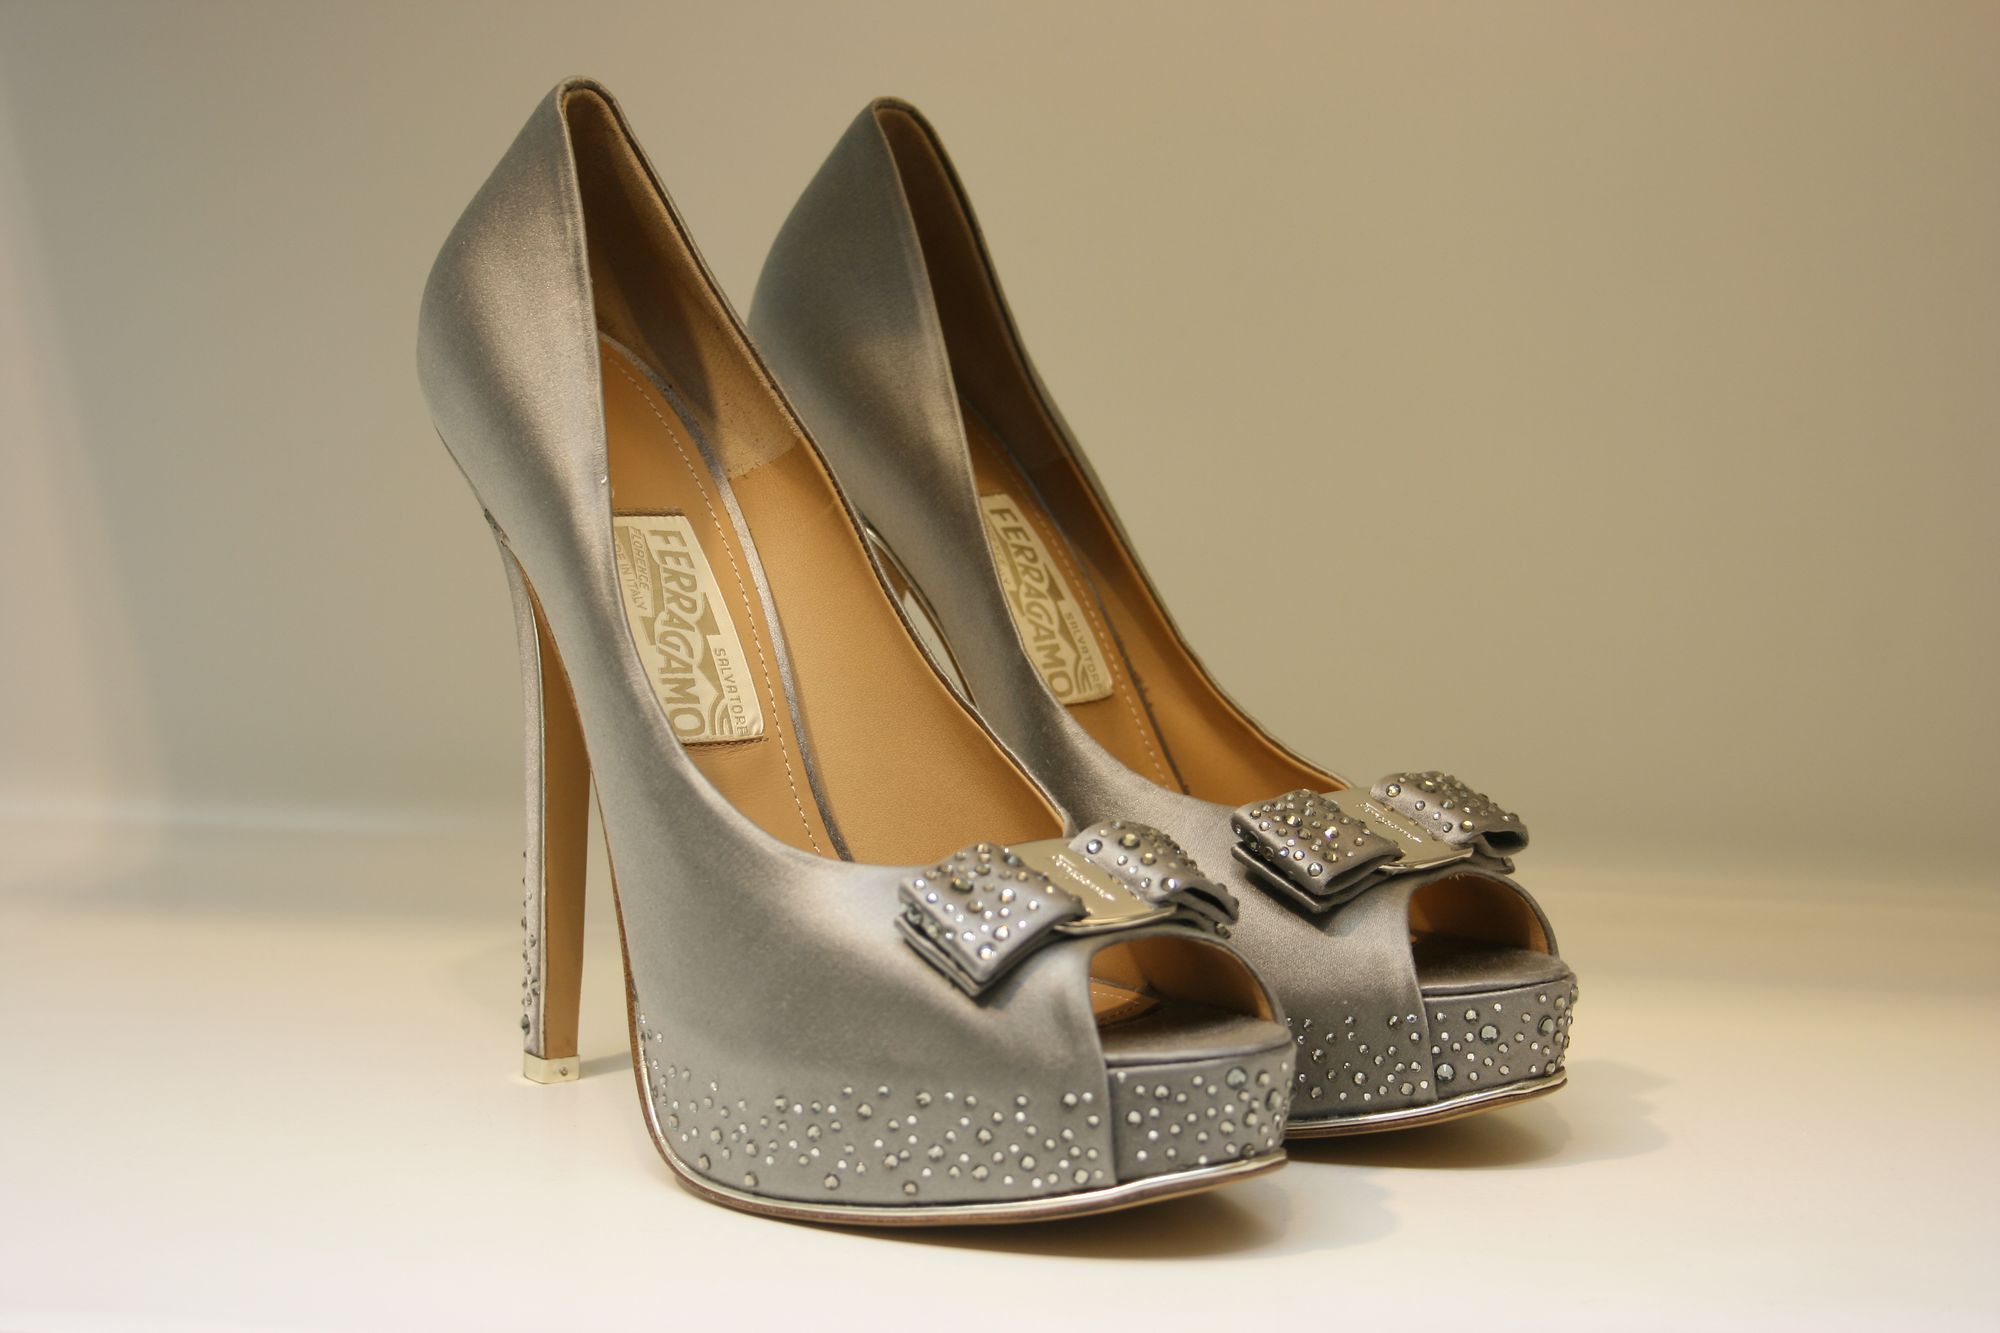 Sonam Kapoor's made-to-order Ferragamo pumps for "Shoes for a Star" project (Photo courtesy | Salvatore Ferragamo)